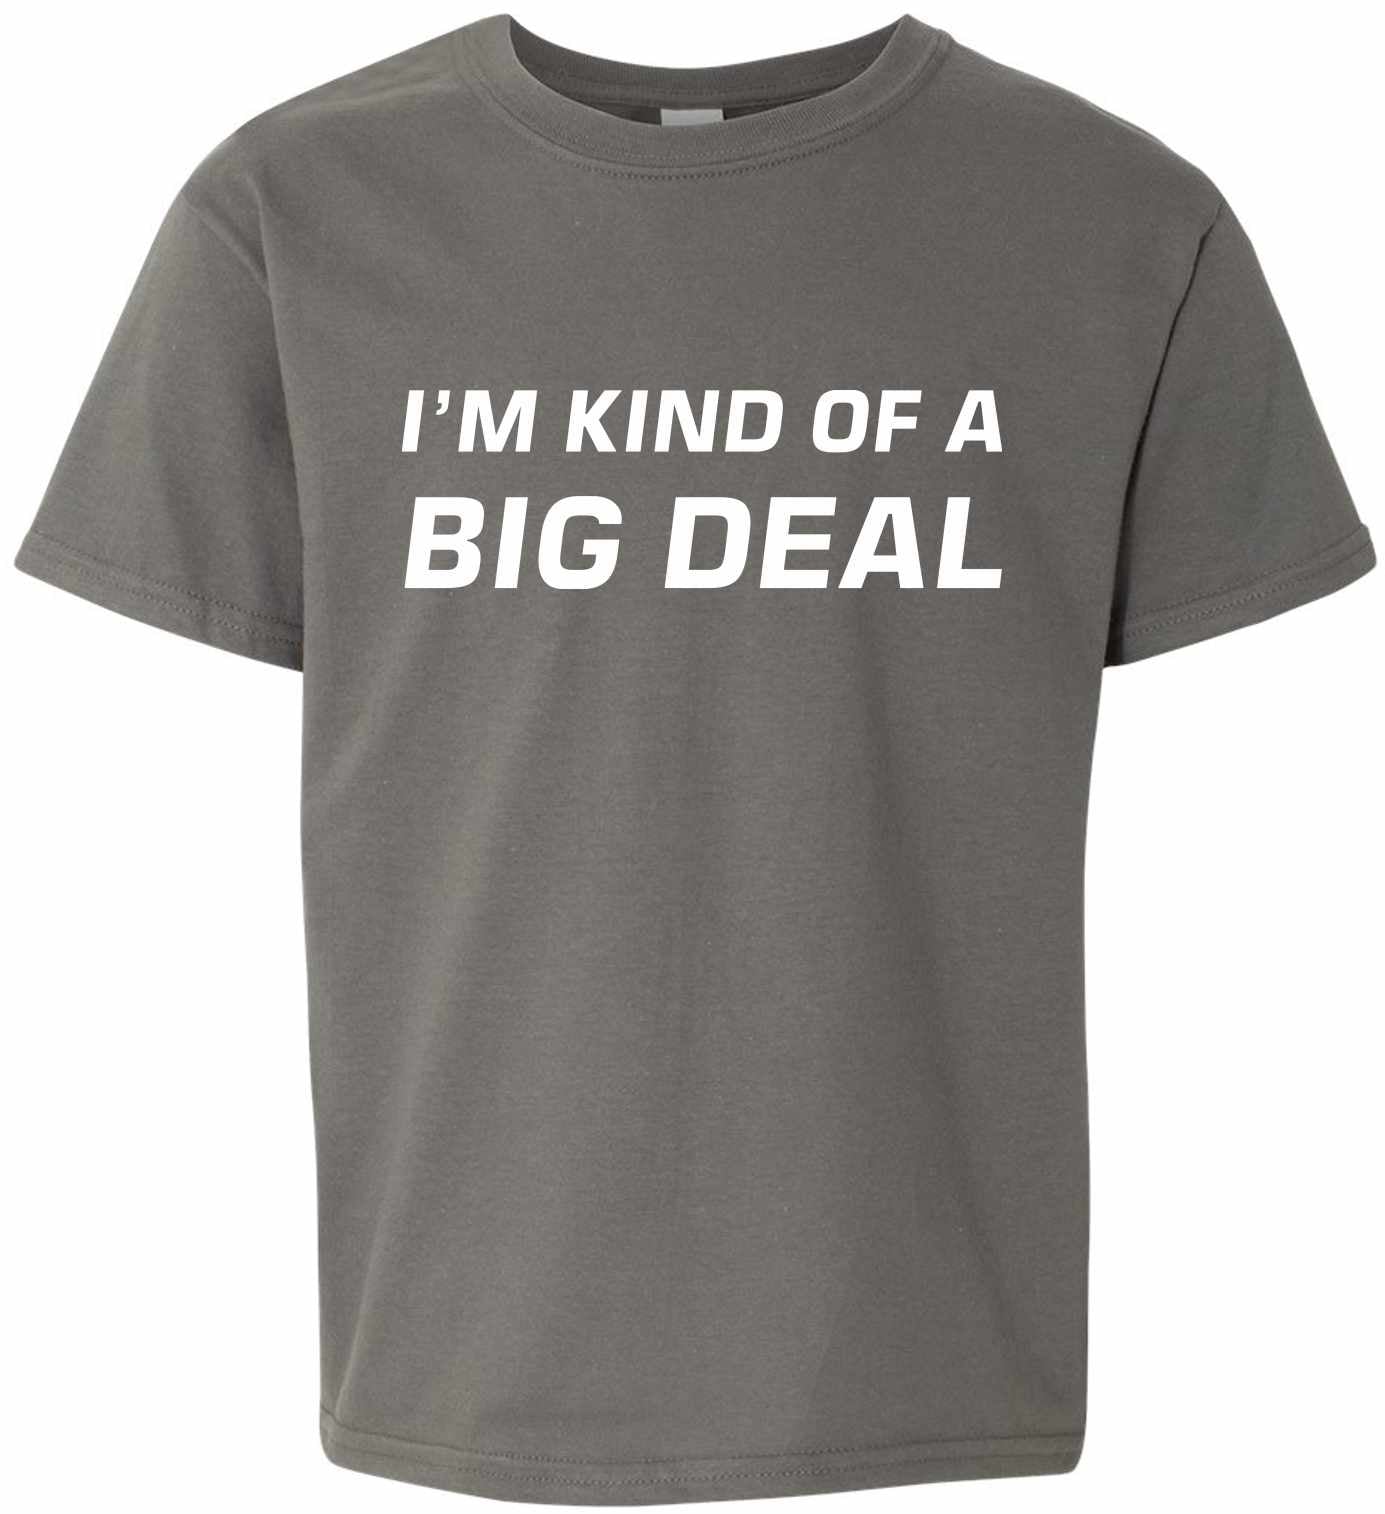 I'm Kind of a Big Deal on Kids T-Shirt (#842-201)